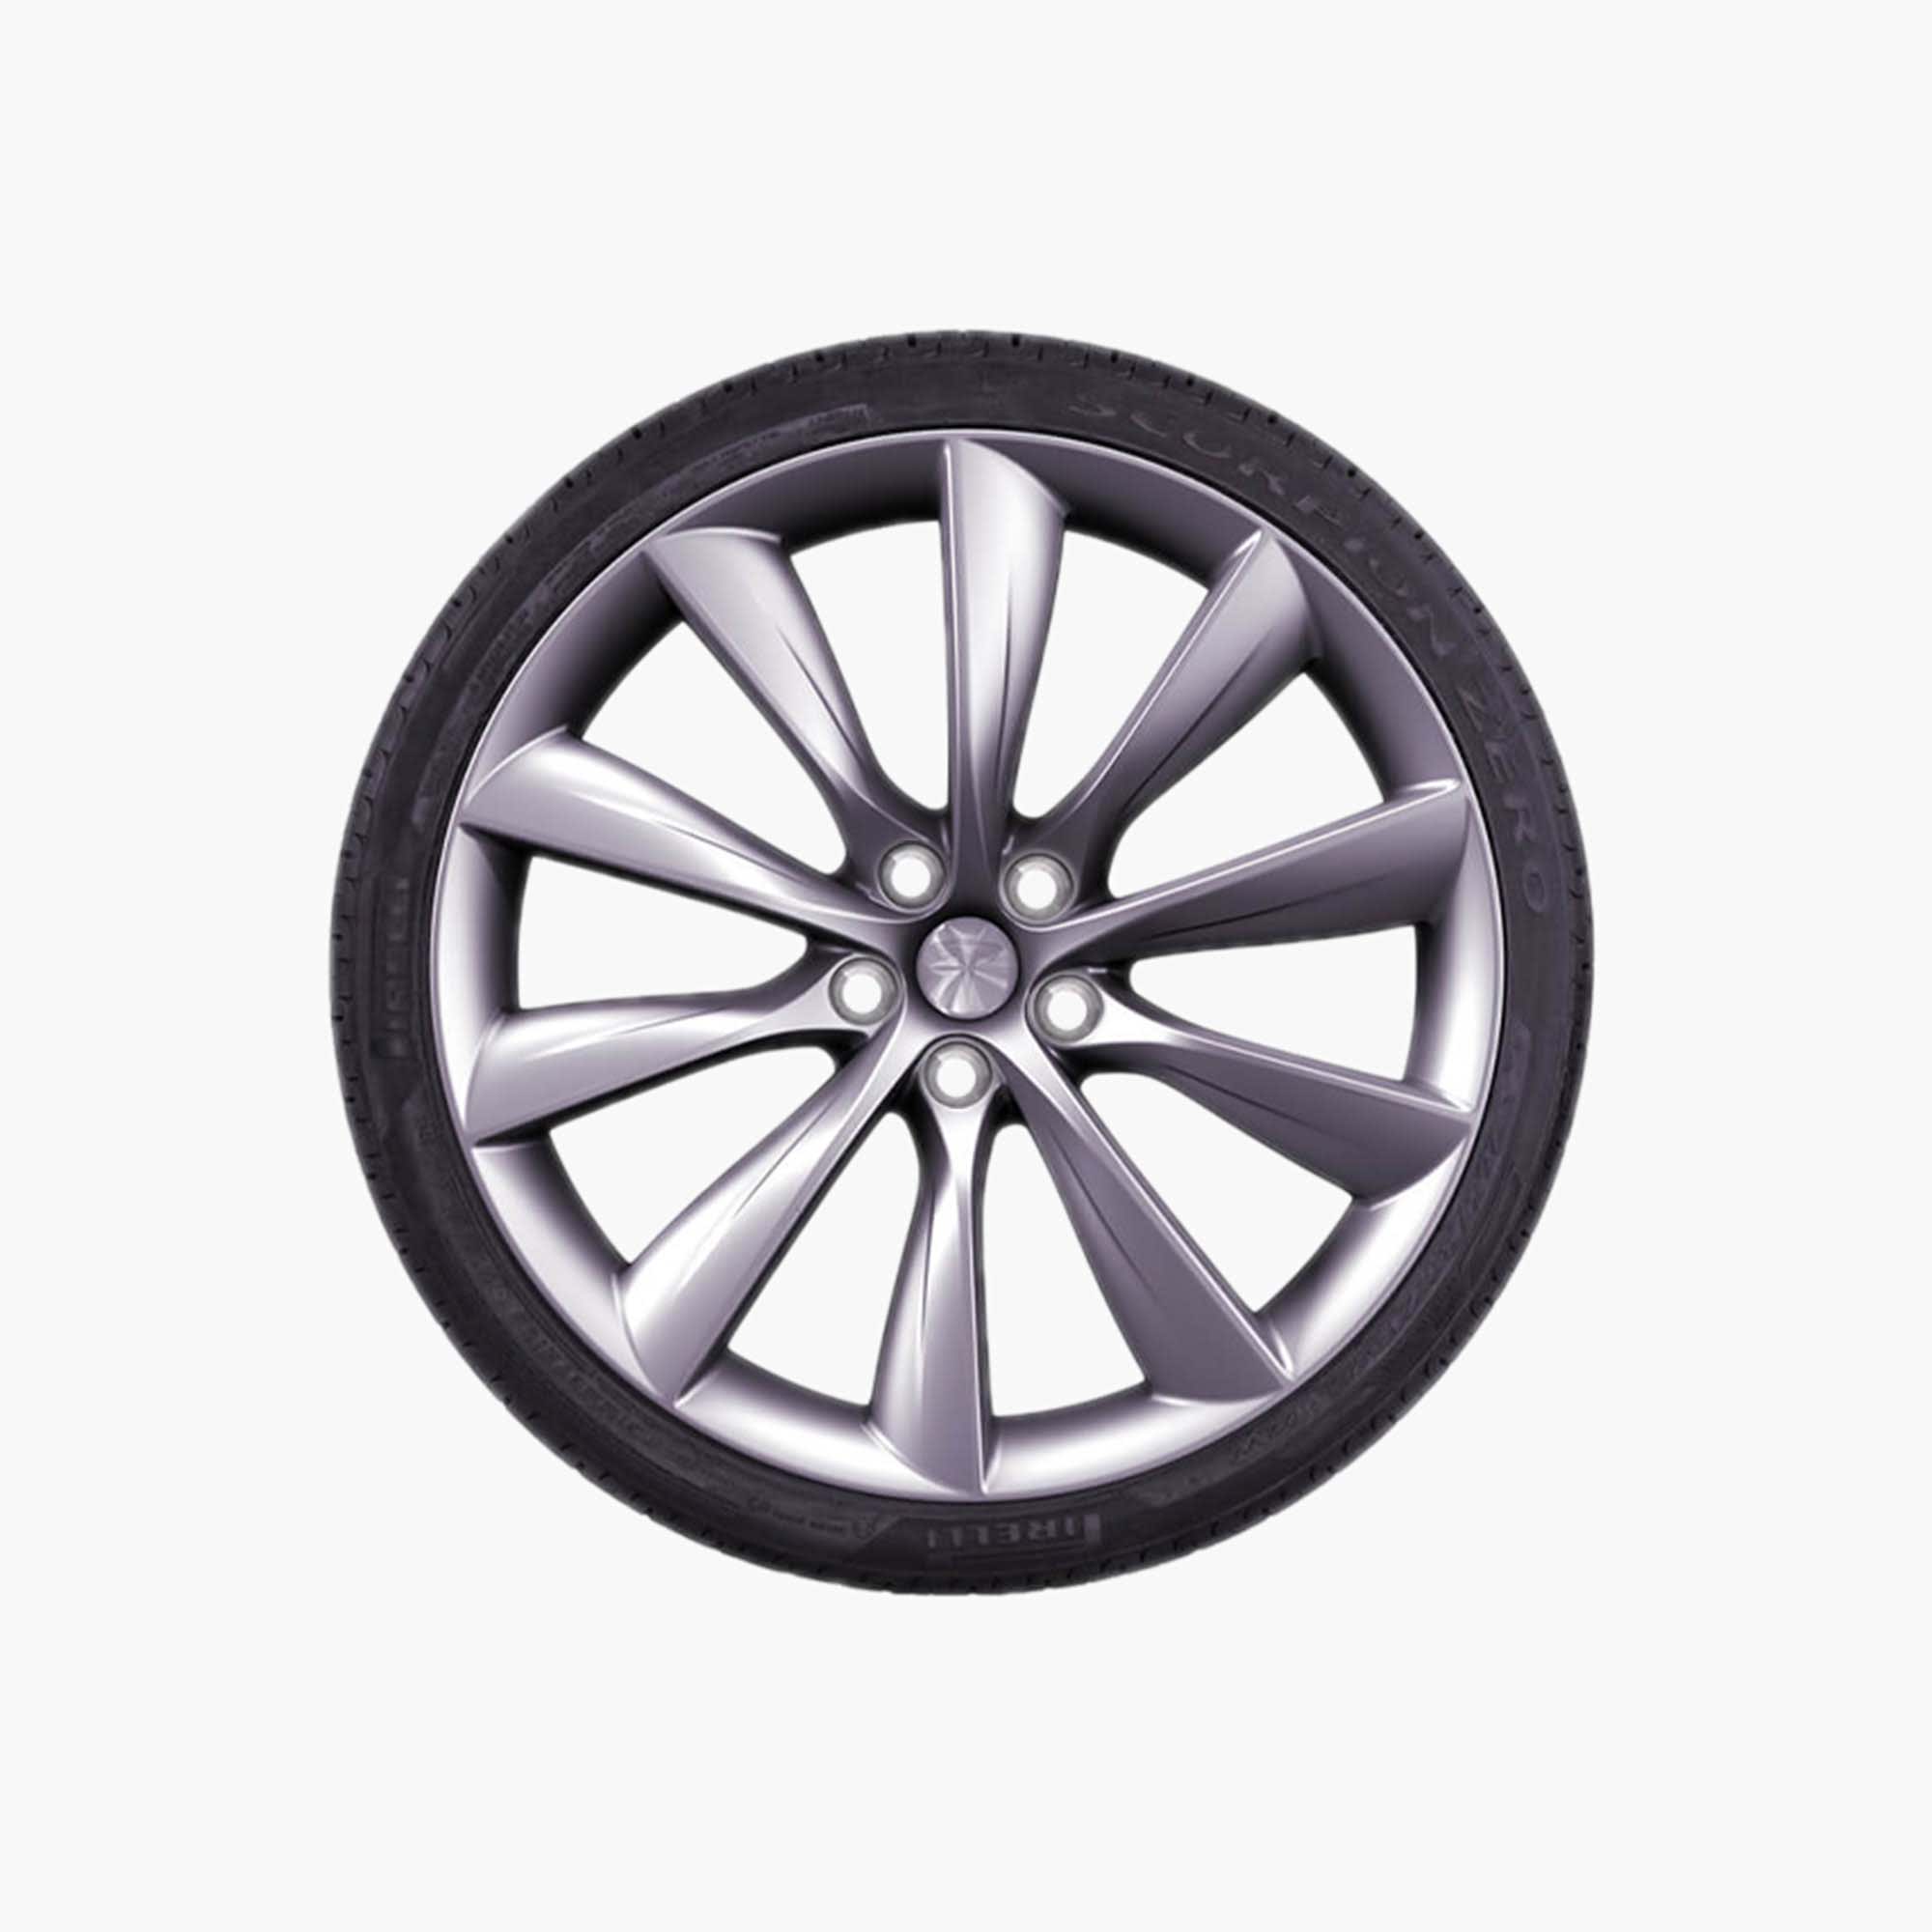 2015-2020 | Model X 22" Turbine Wheel and Pirelli Scorpion Tire Package